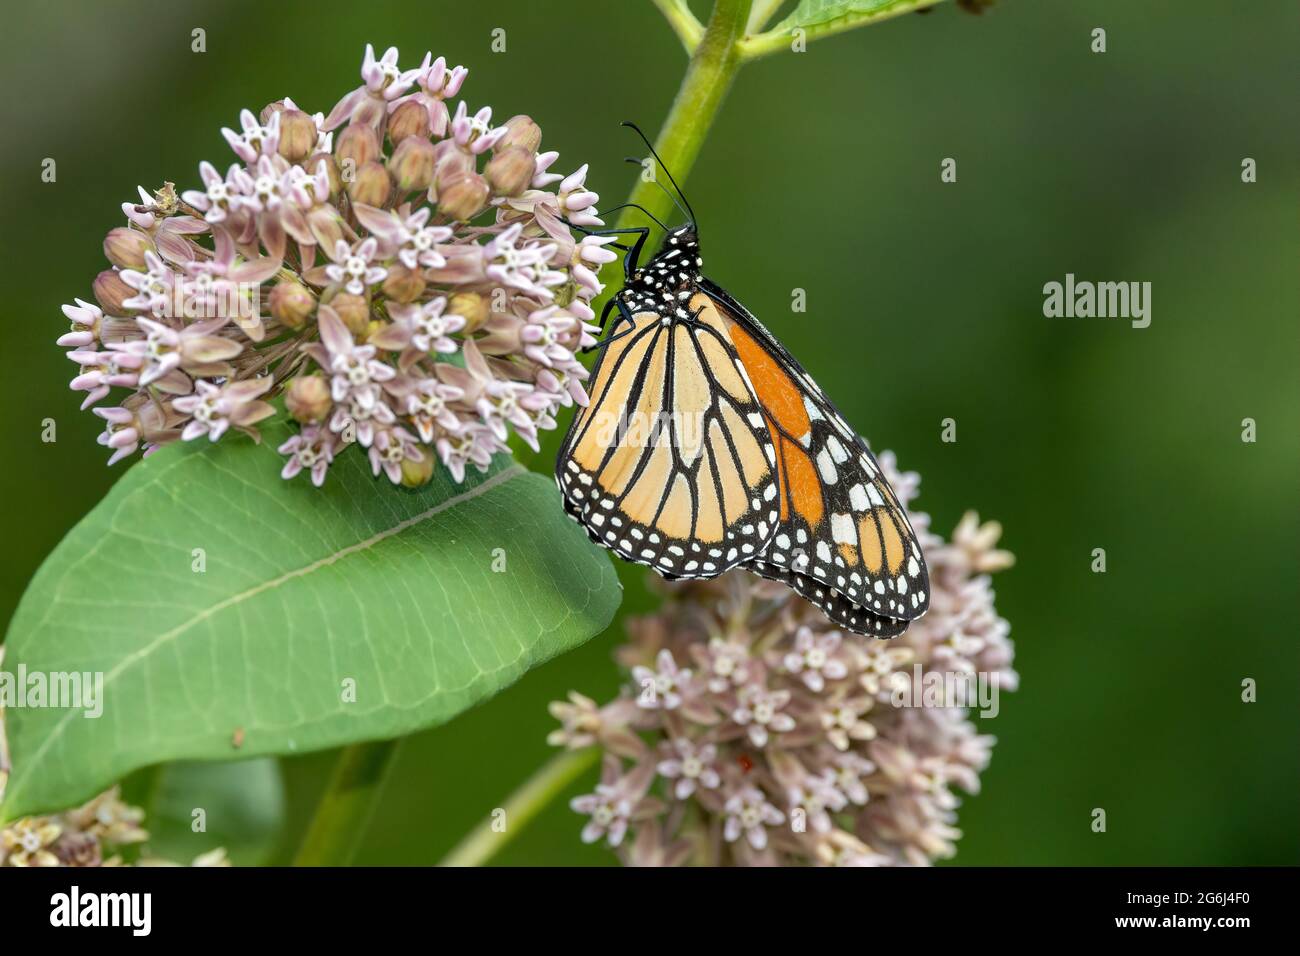 Monarch butterfly on common milkweed Stock Photo - Alamy